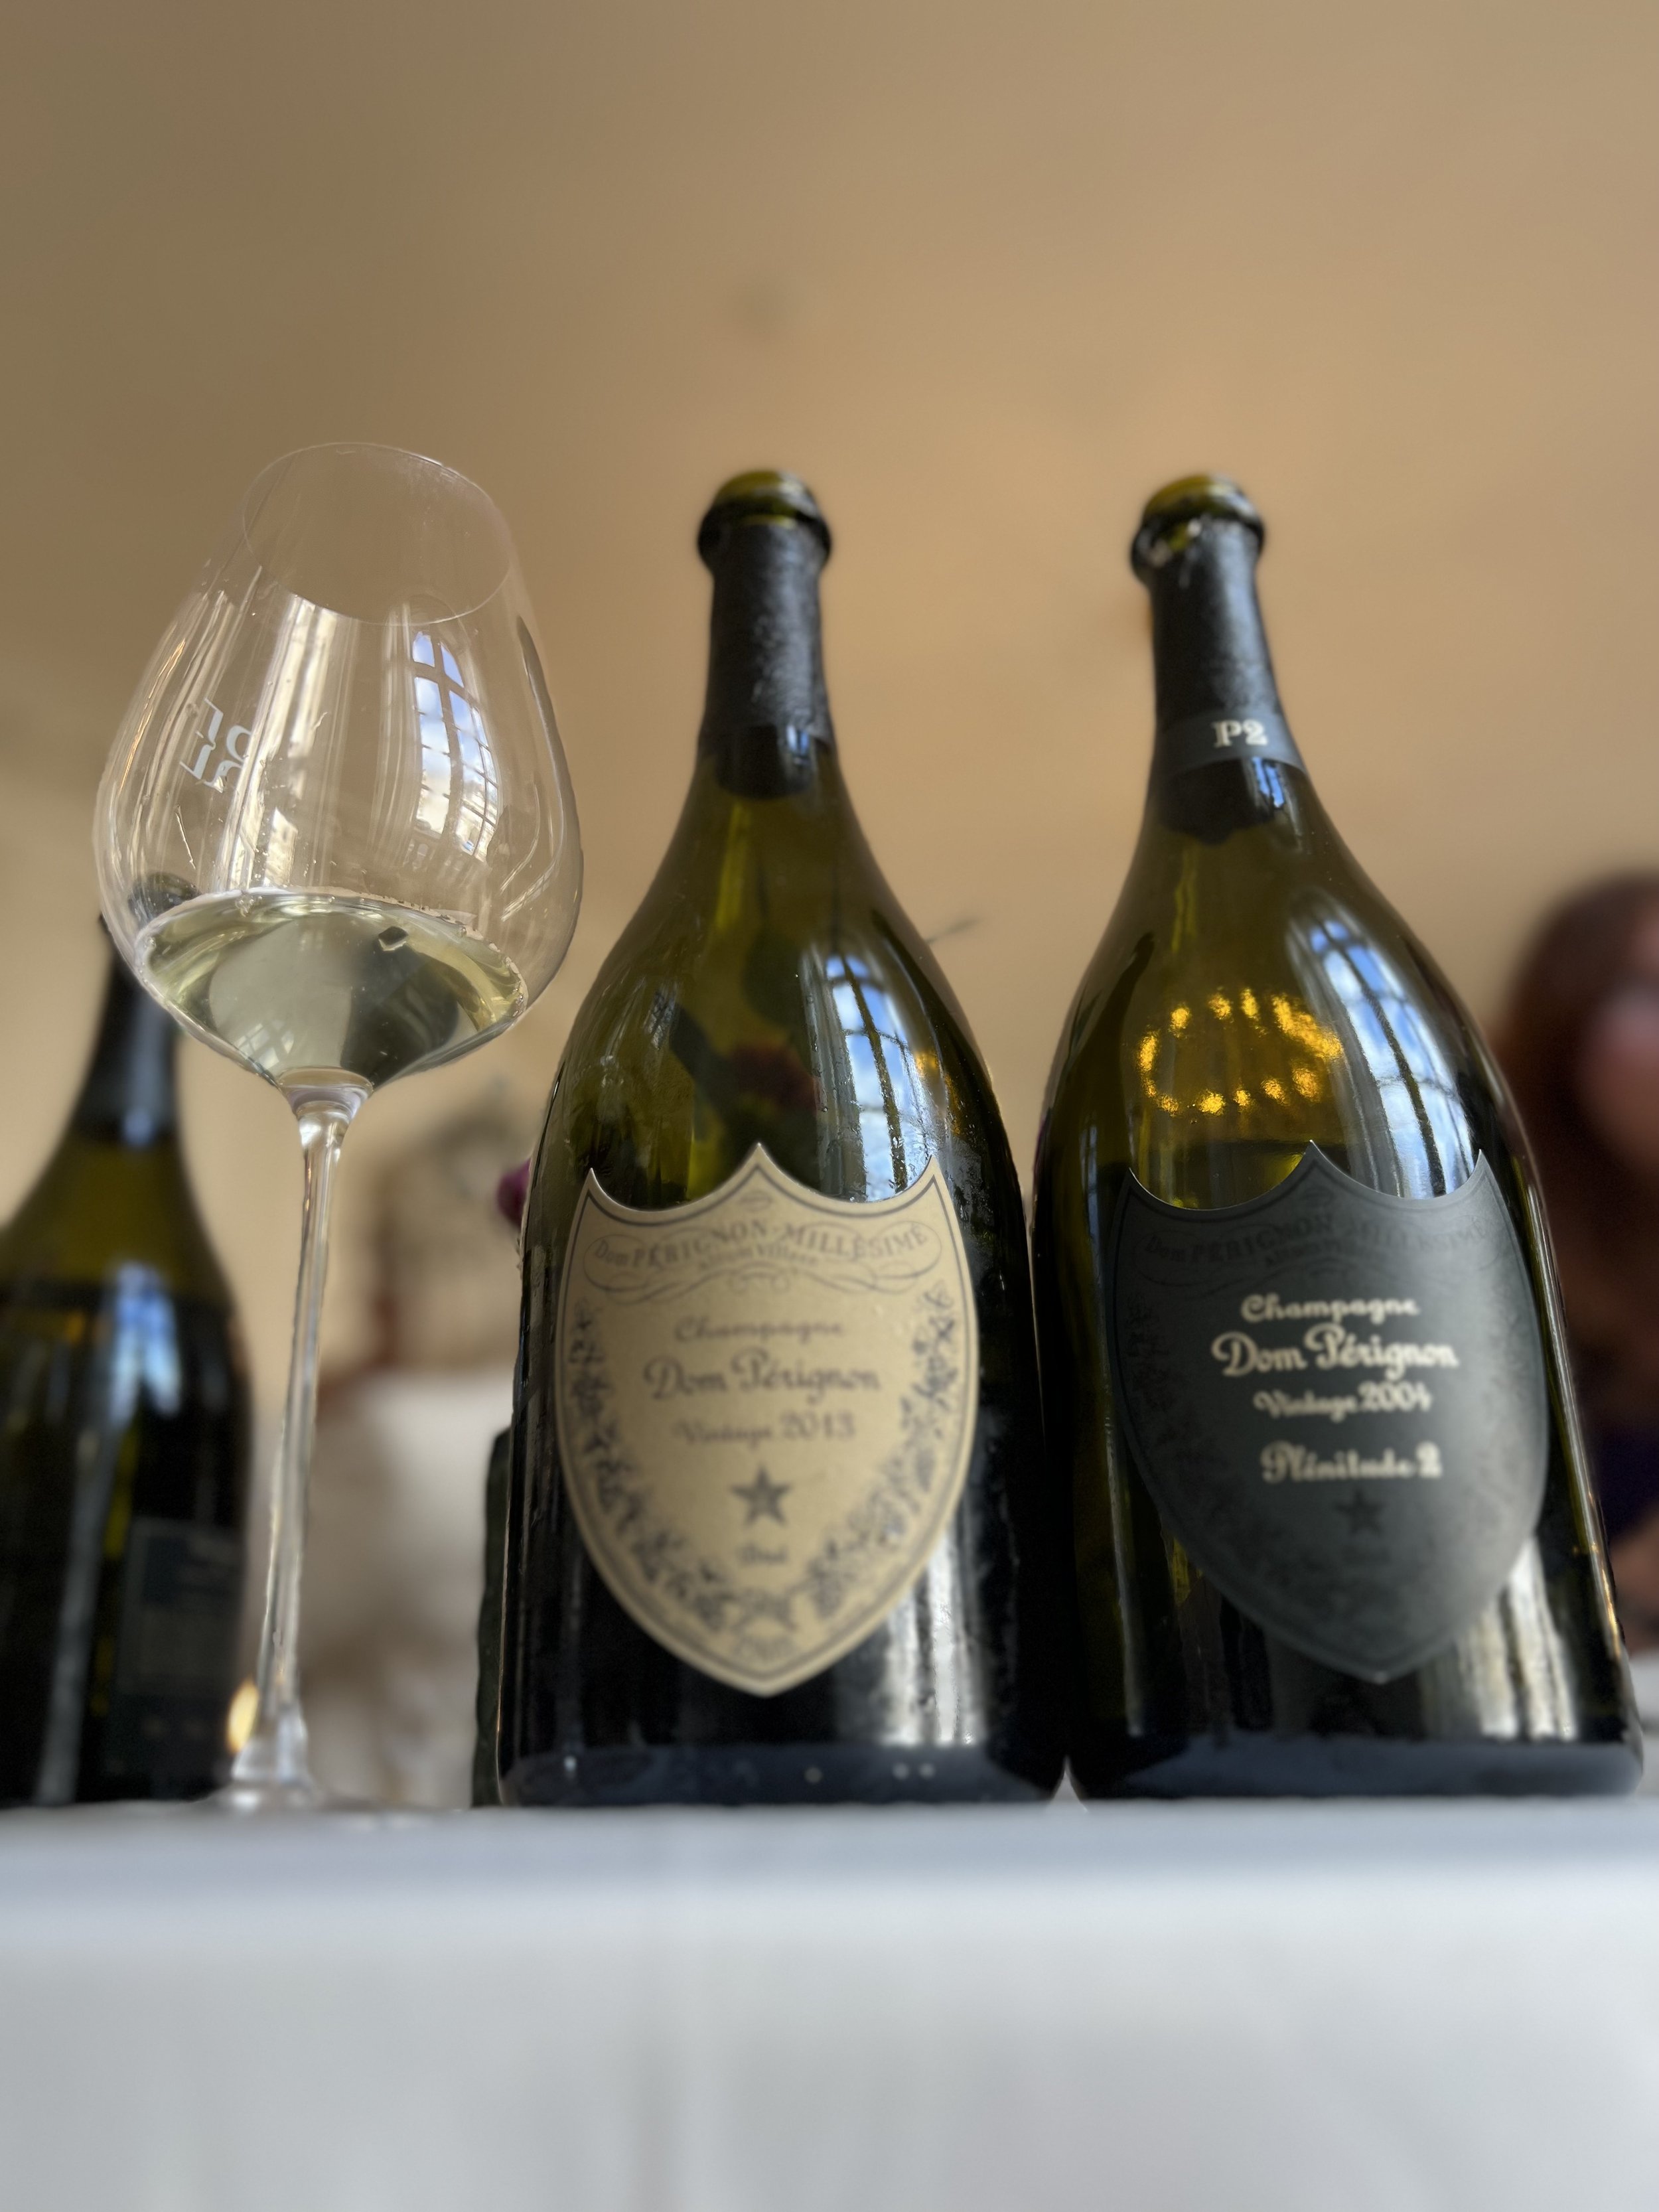 Tyson Stelzer Champagne.Guide Event Reims. Travel and Champagne Dom Perignon.jpeg